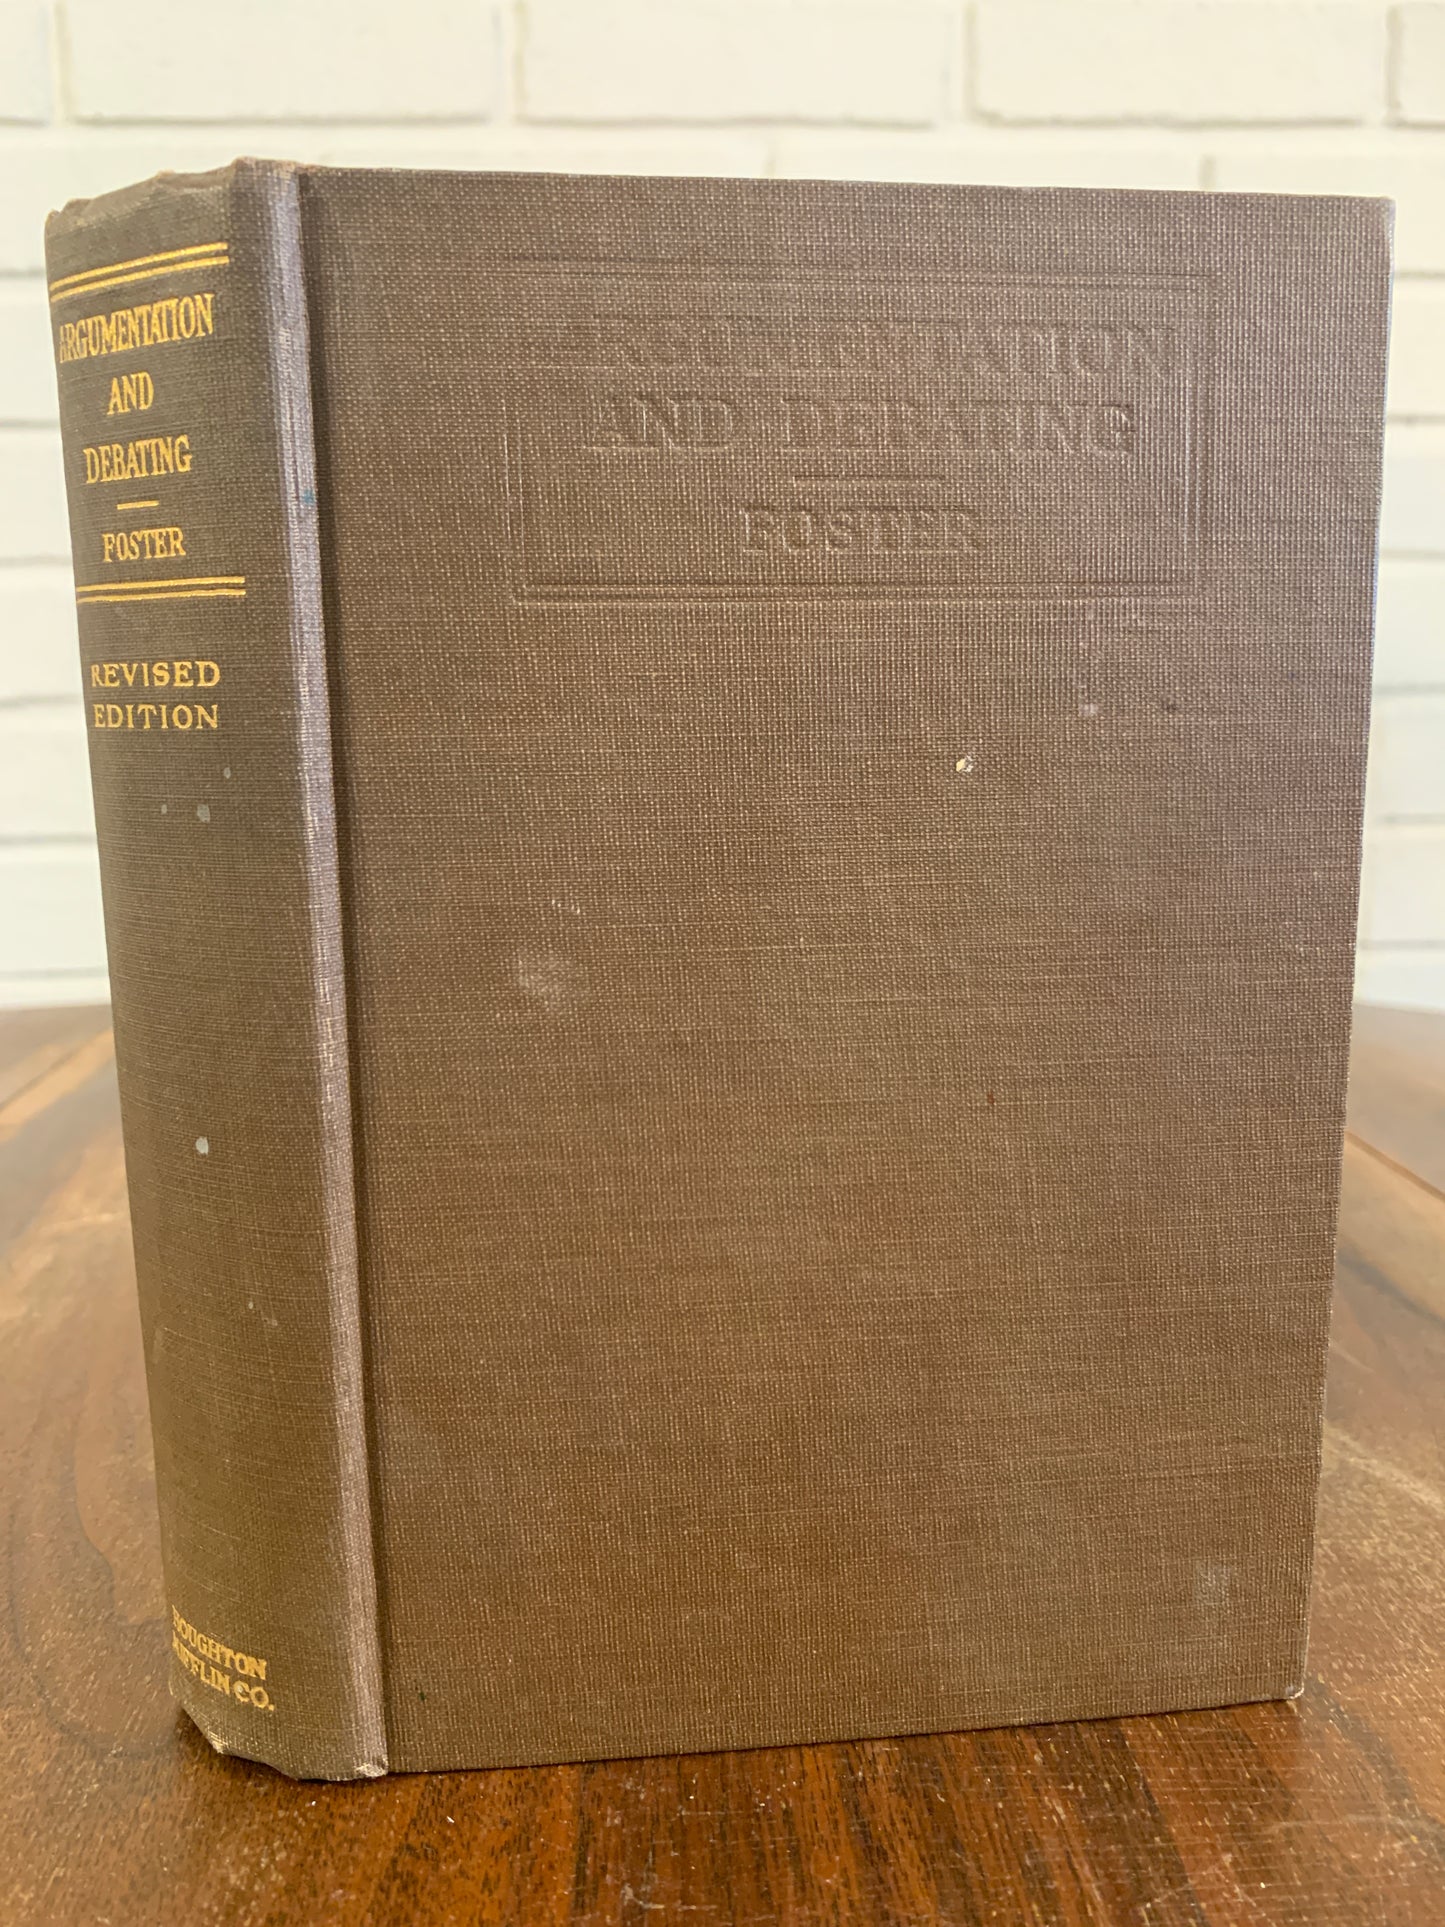 Argumentation and Debate, William Trufant Foster, Revised Edition, 1917